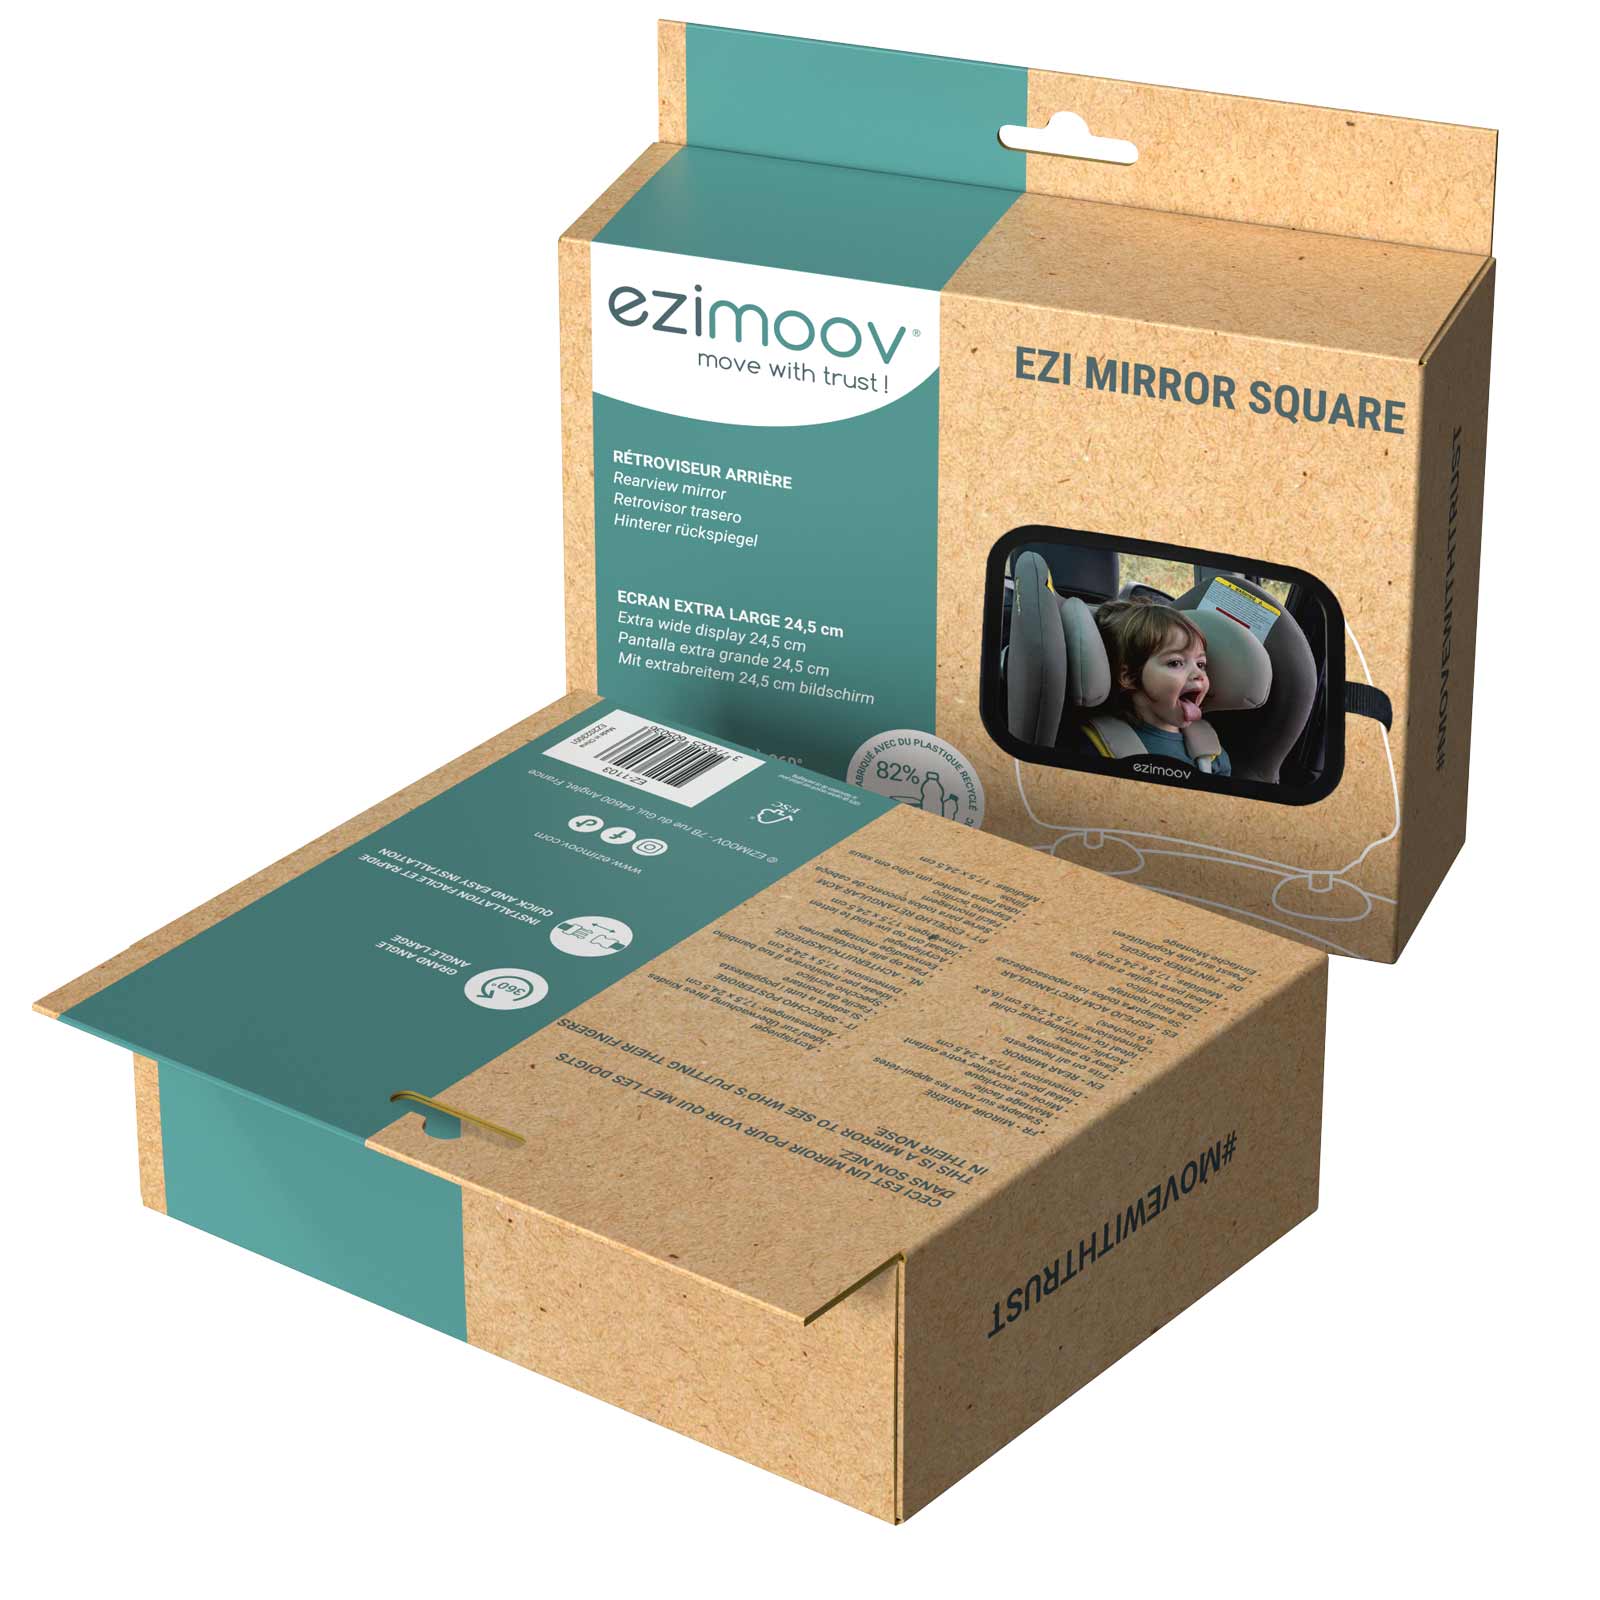 ezimoov_grand_miroir_reglable_packaging_1